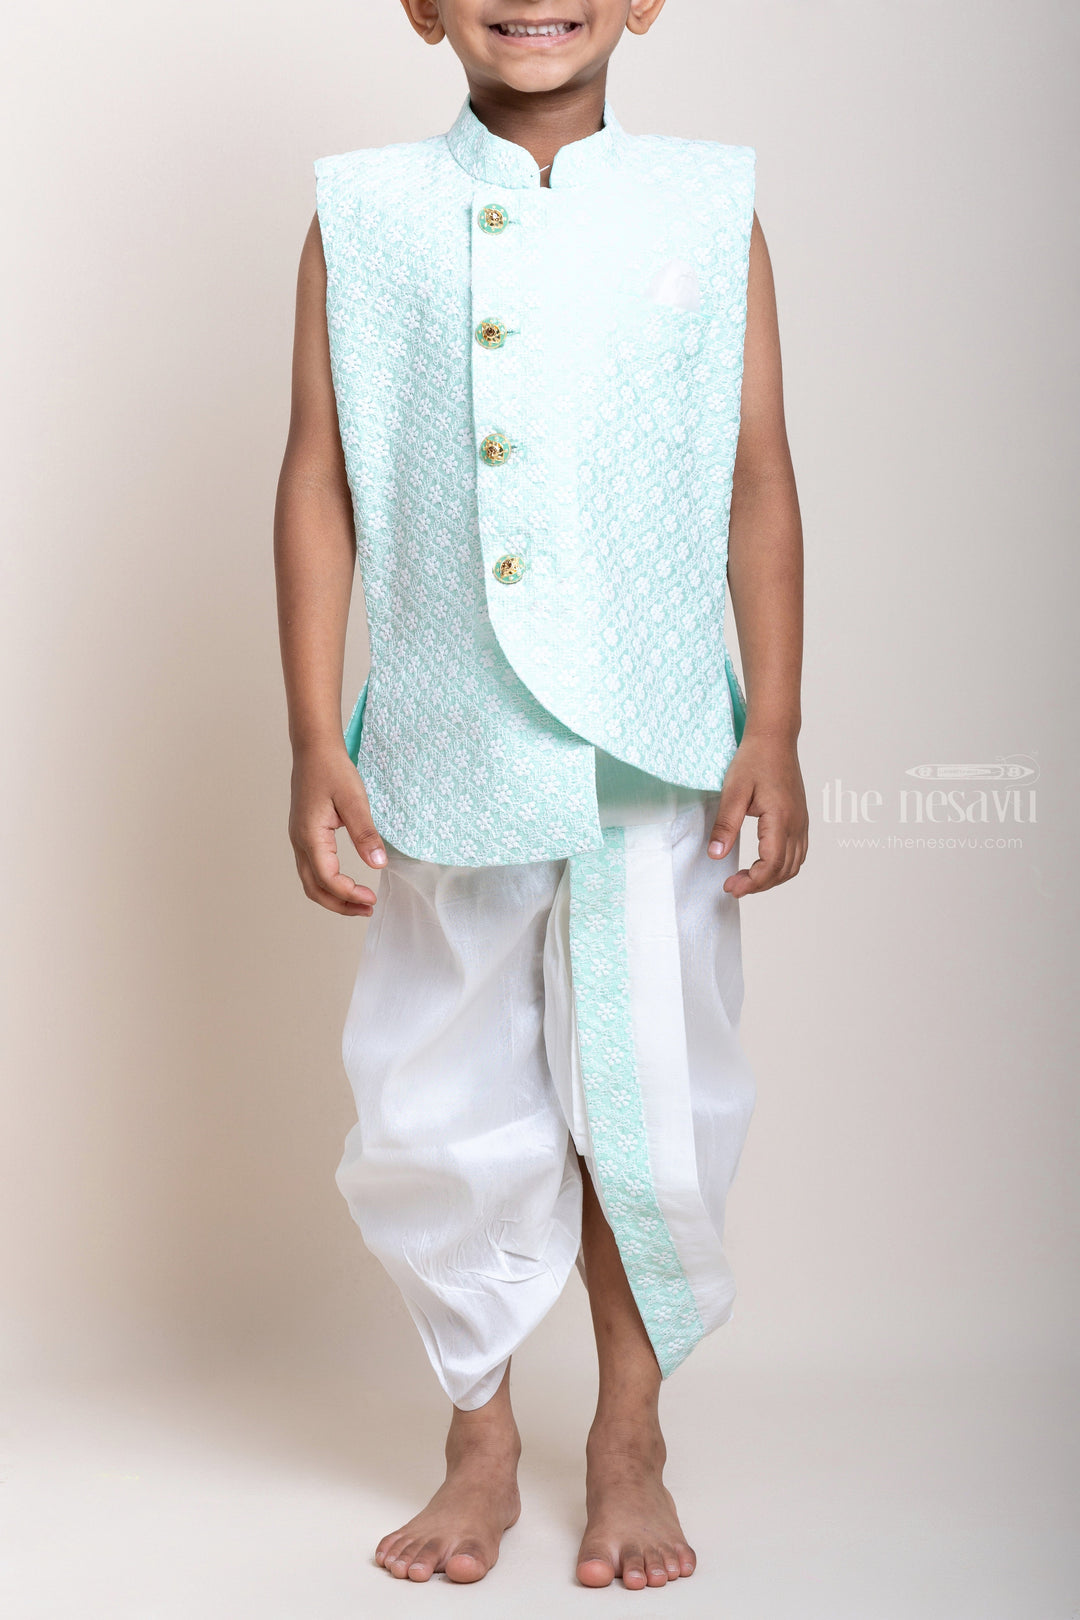 The Nesavu Boys Dothi Set Green Sleeveless Floral Embroidery Kurta With Striped White Dhoti For Boys psr silks Nesavu